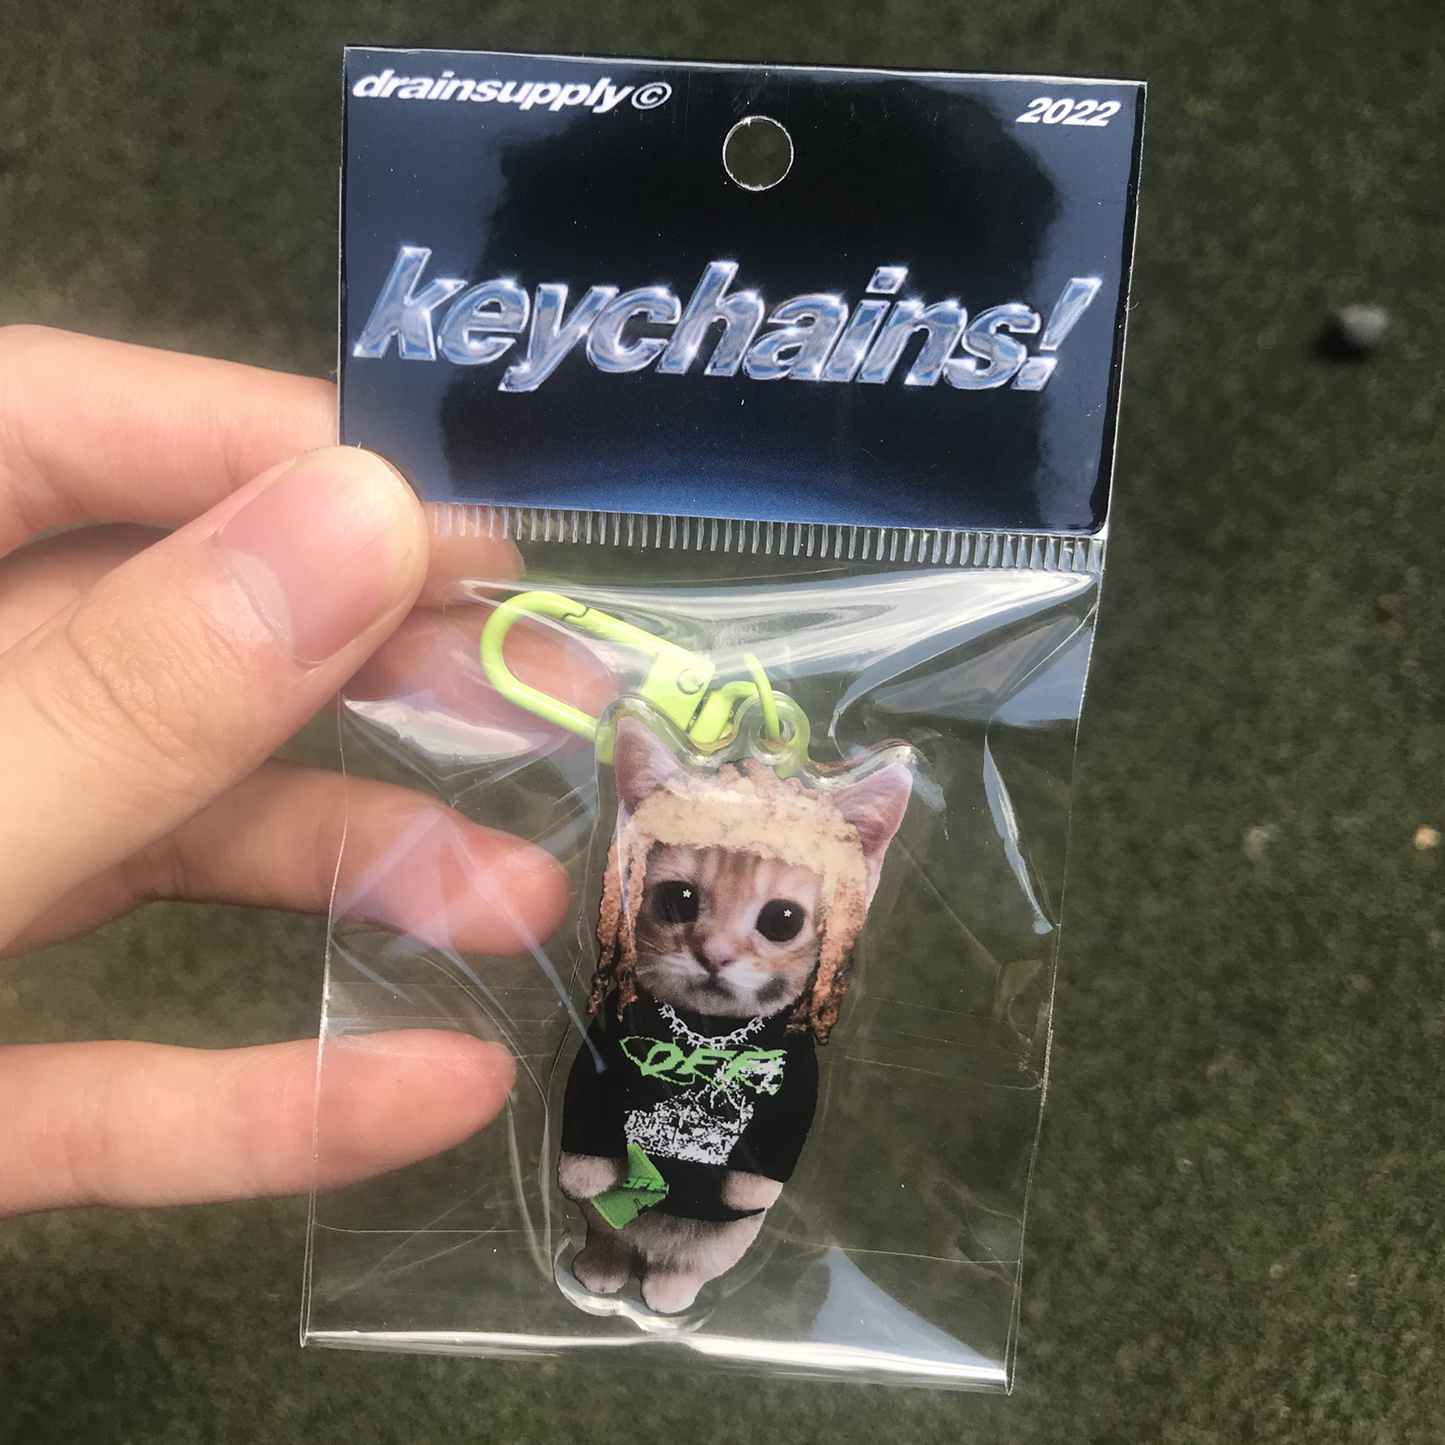 Lil Uzi Vert Spikes Kitty Keychain